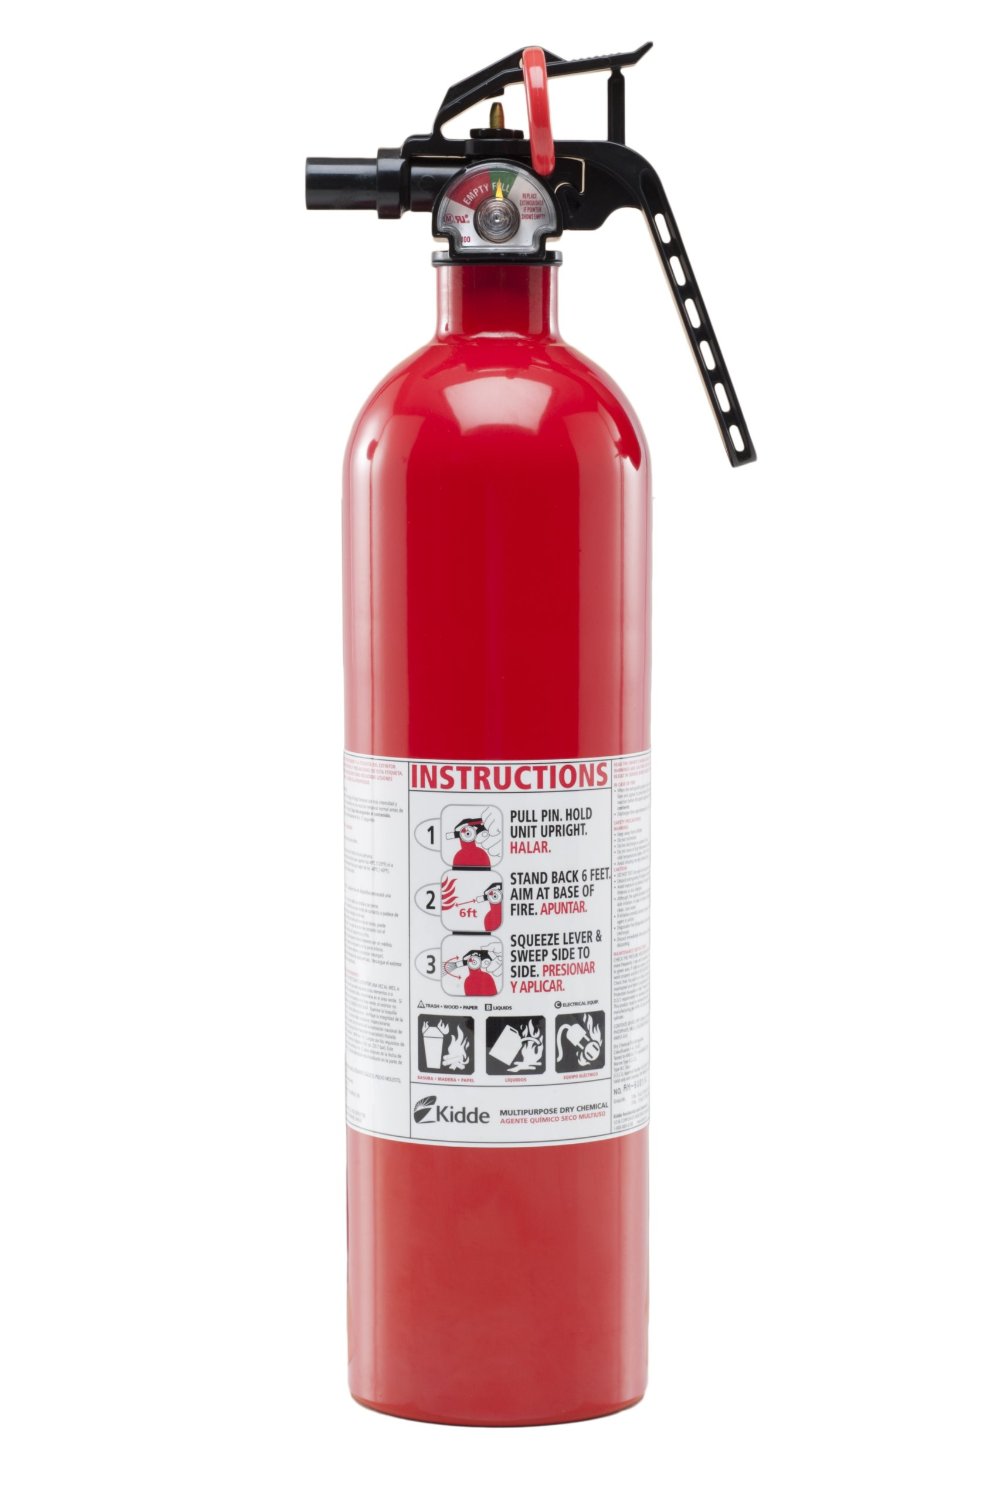 Kidde Multi Purpose Fire Extinguisher – Just $19.98!